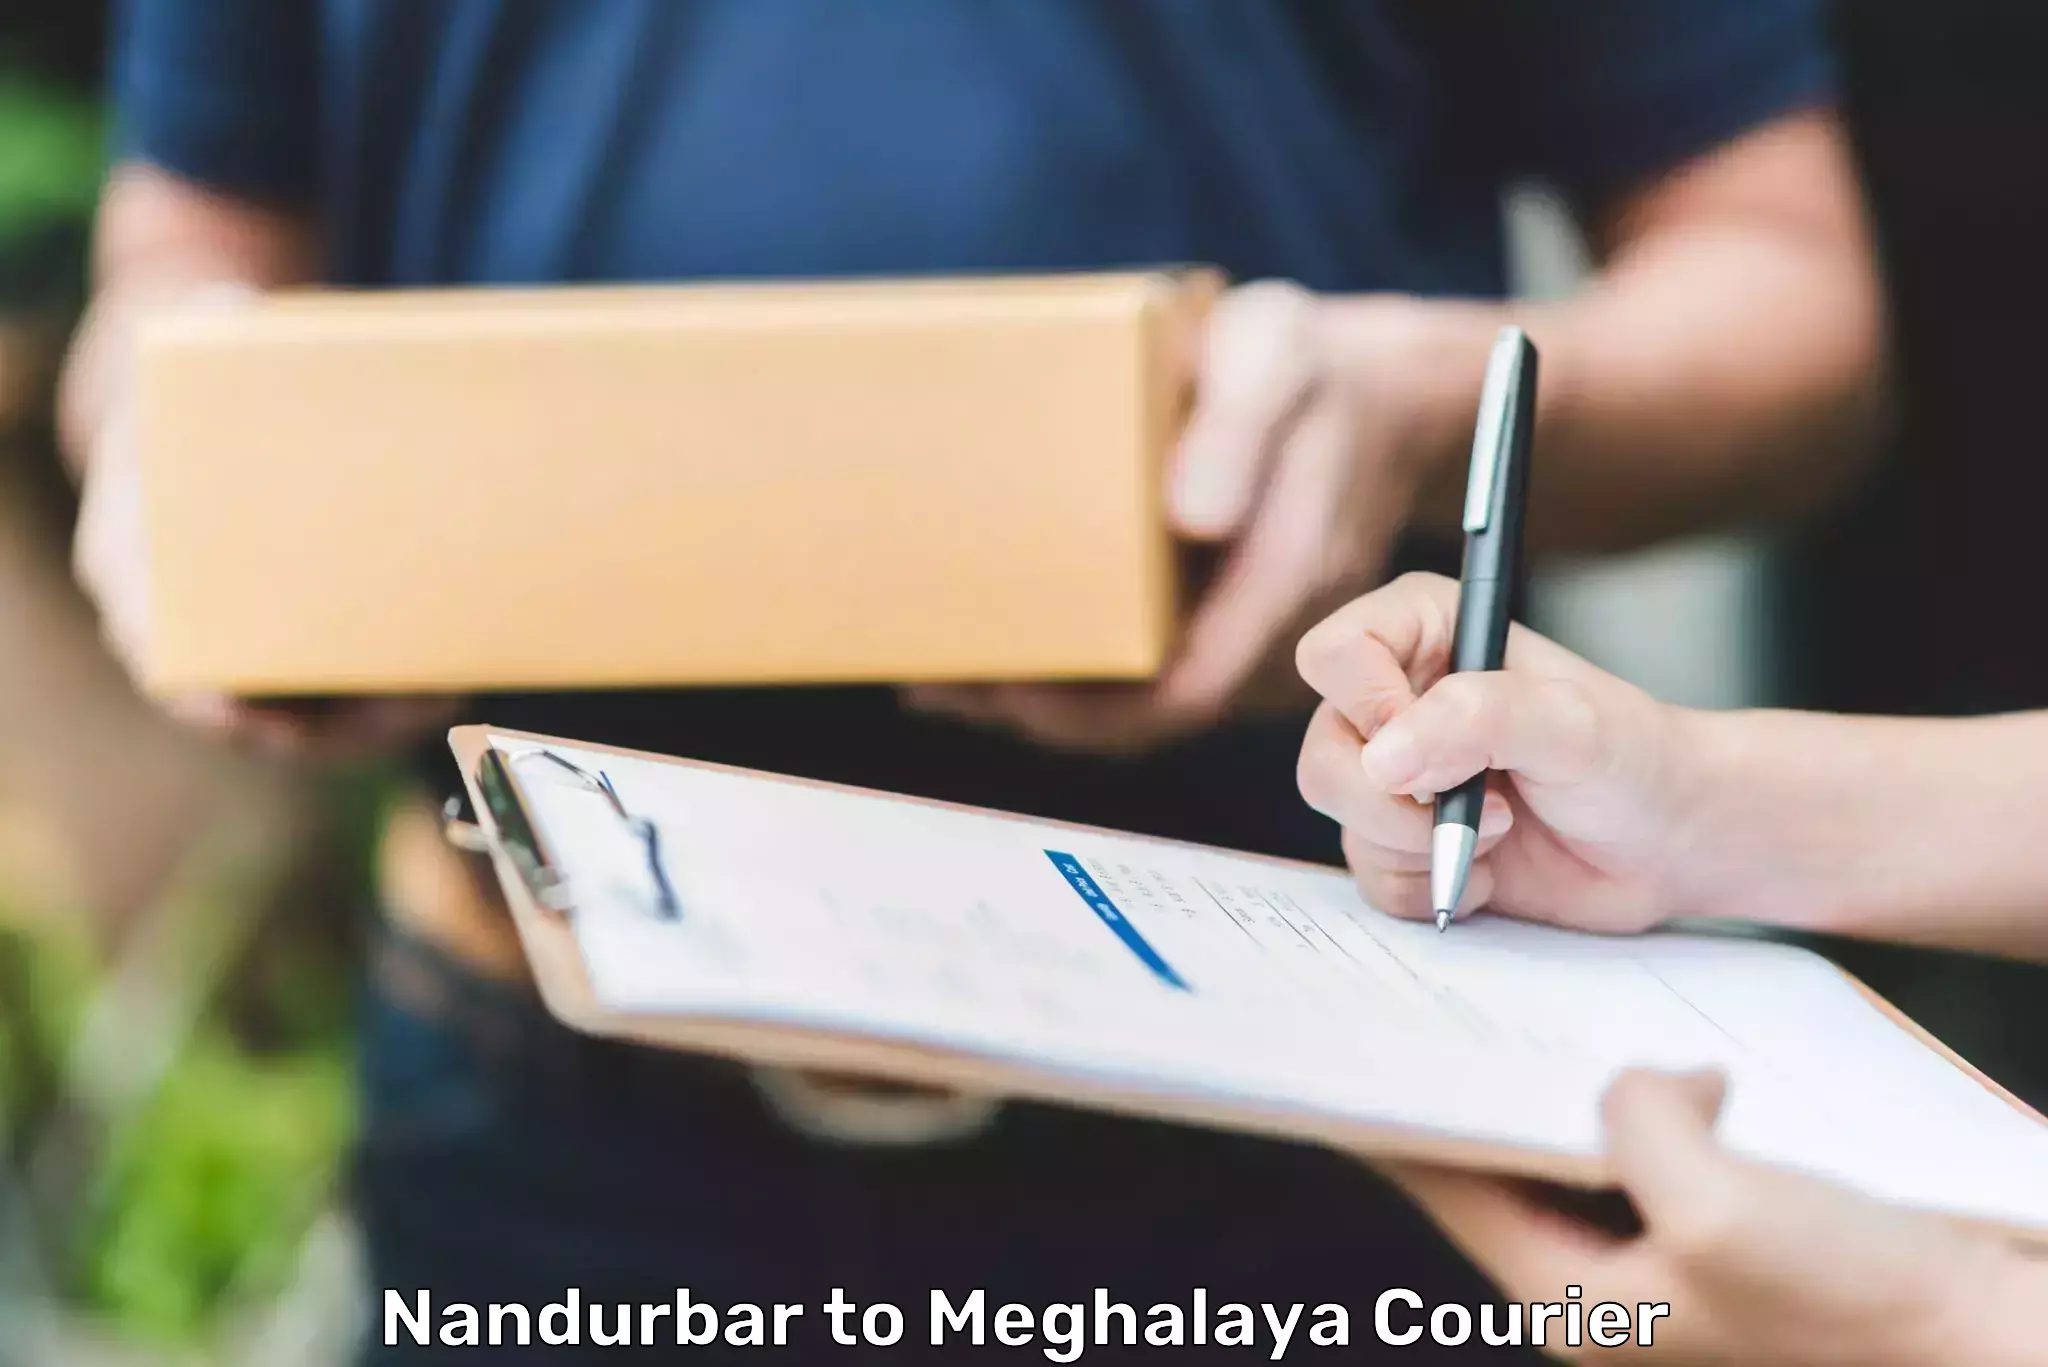 Reliable logistics providers Nandurbar to Shillong